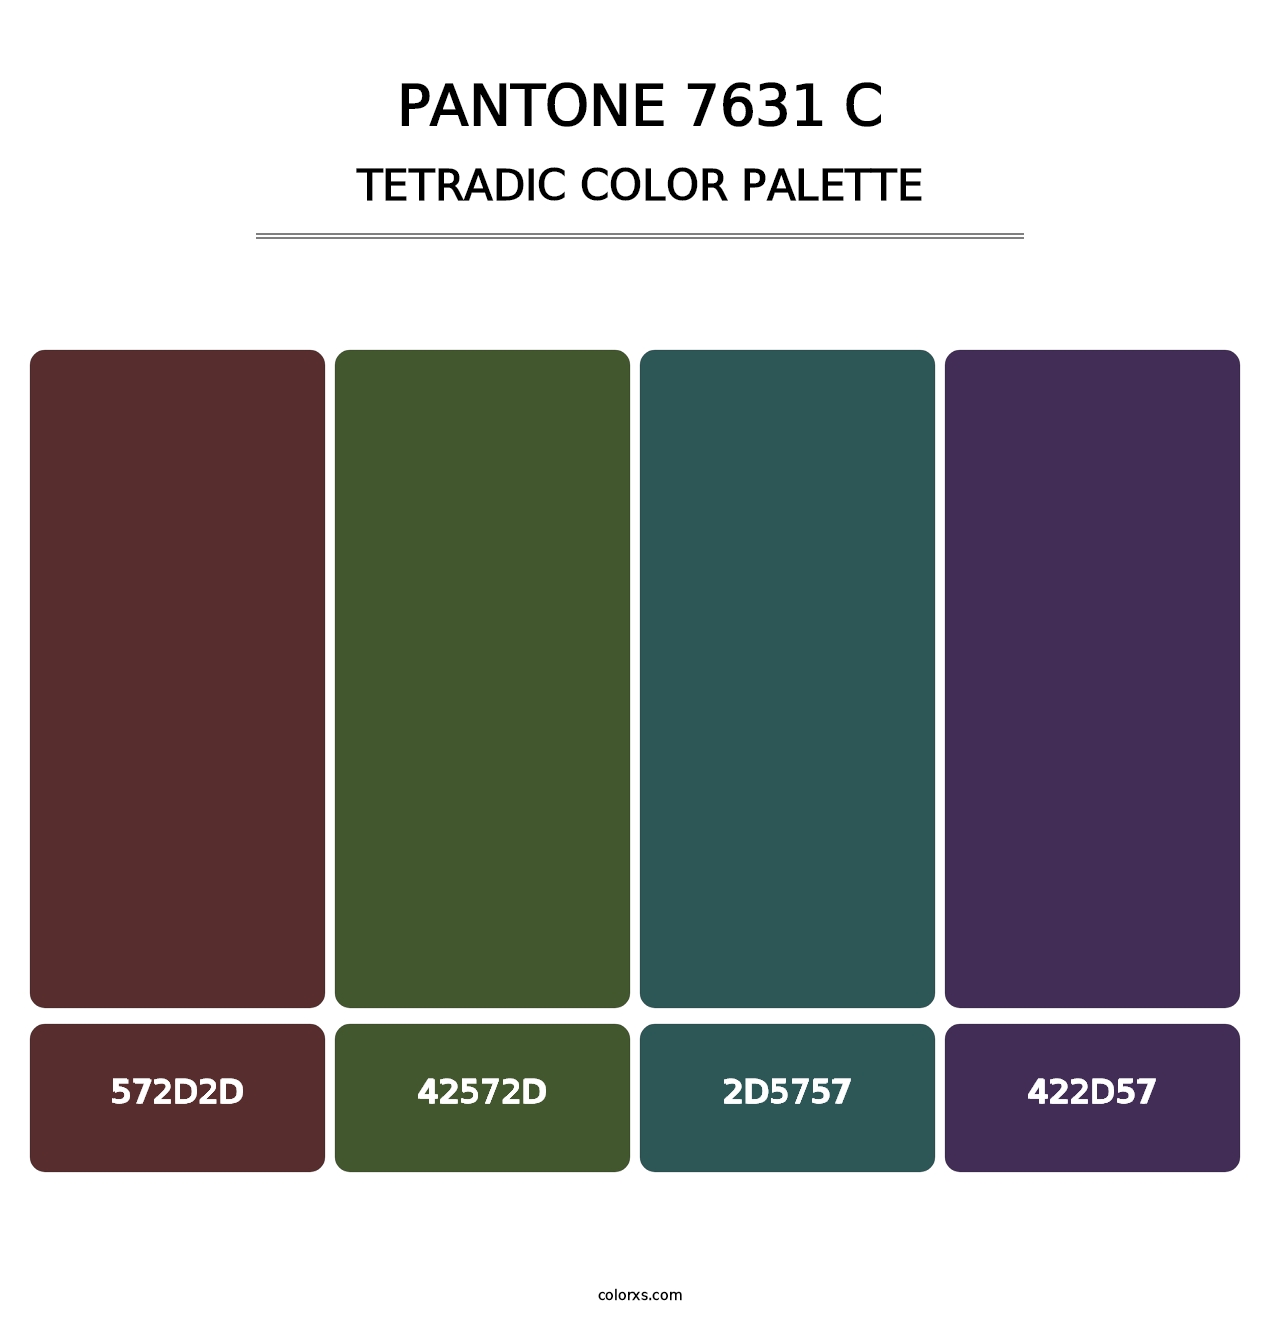 PANTONE 7631 C - Tetradic Color Palette